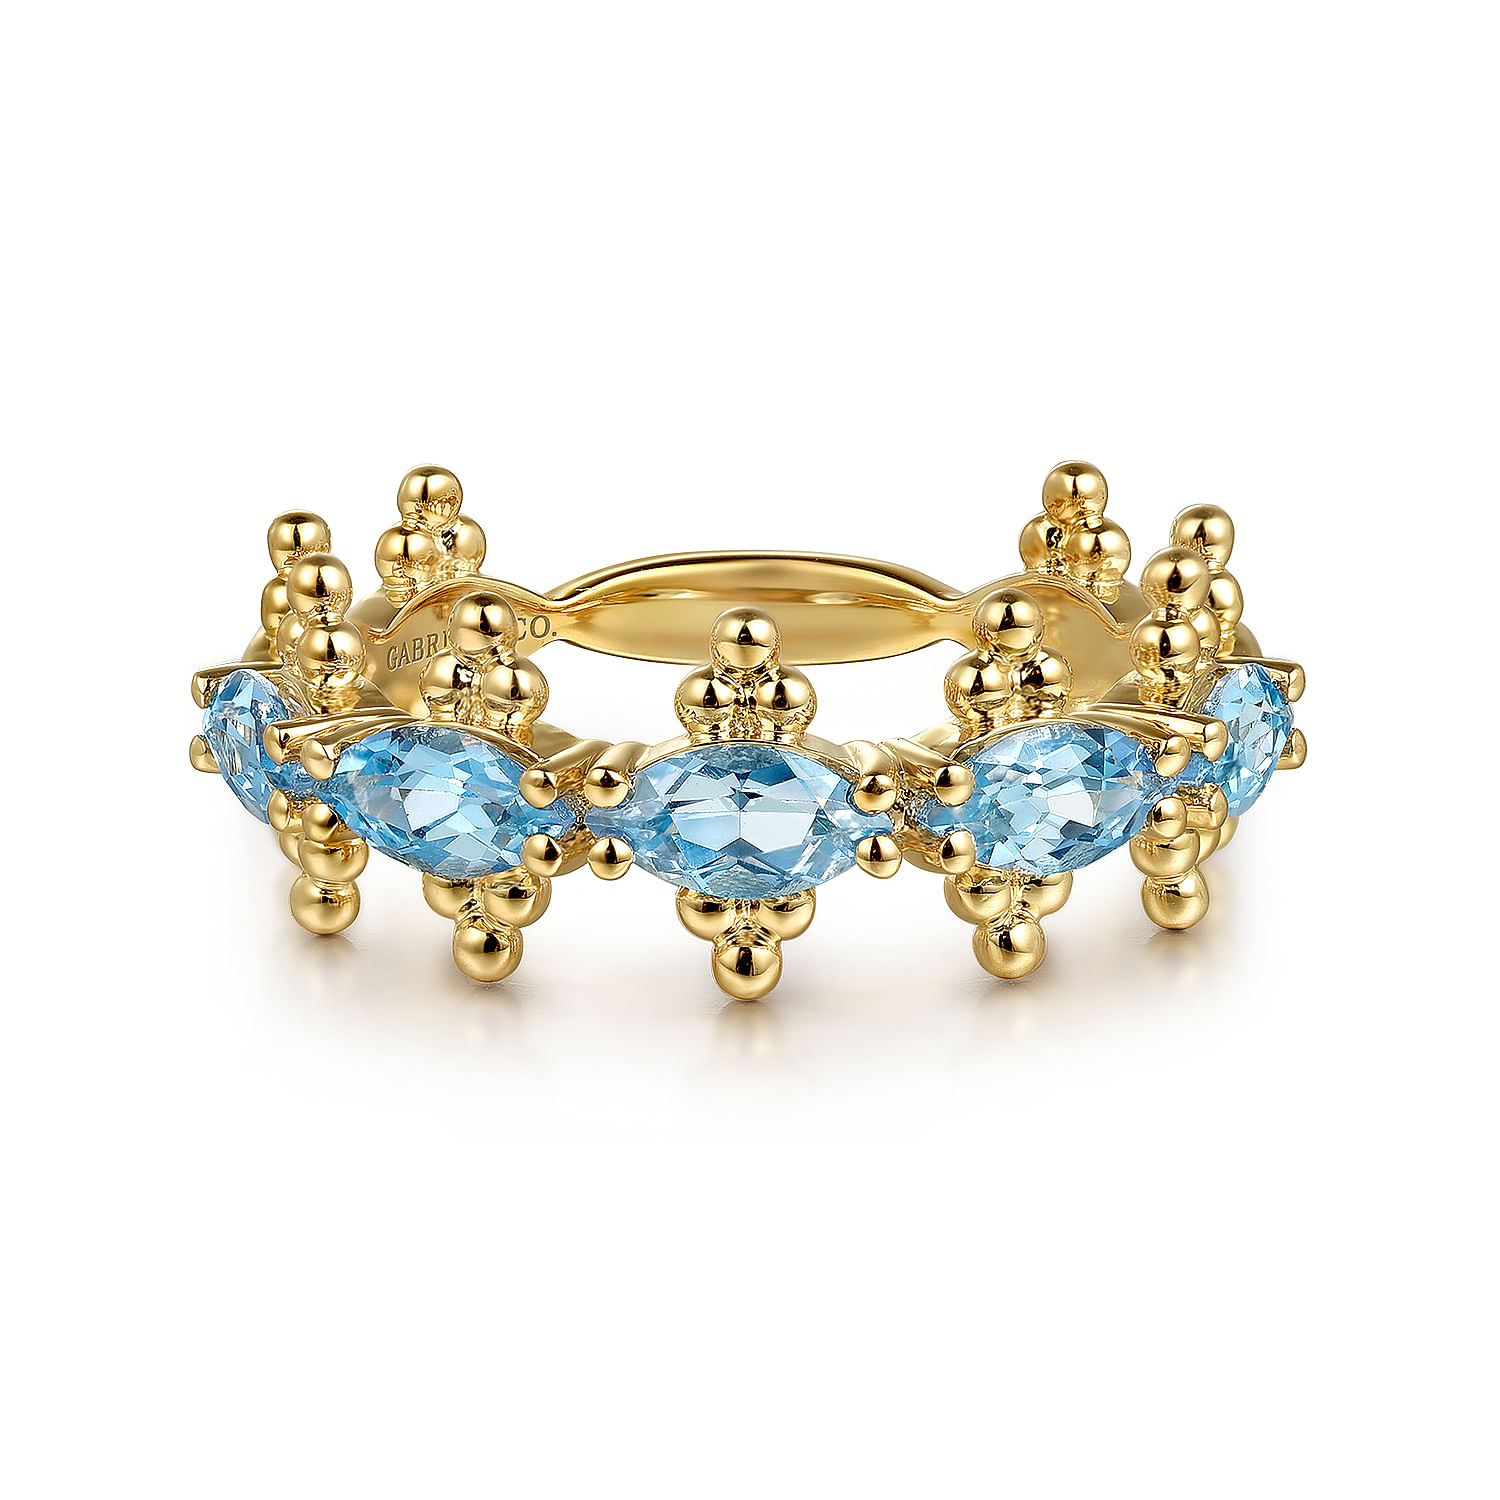 Gabriel - 14K Yellow Gold Bujukan Blue Topaz Fashion Ring